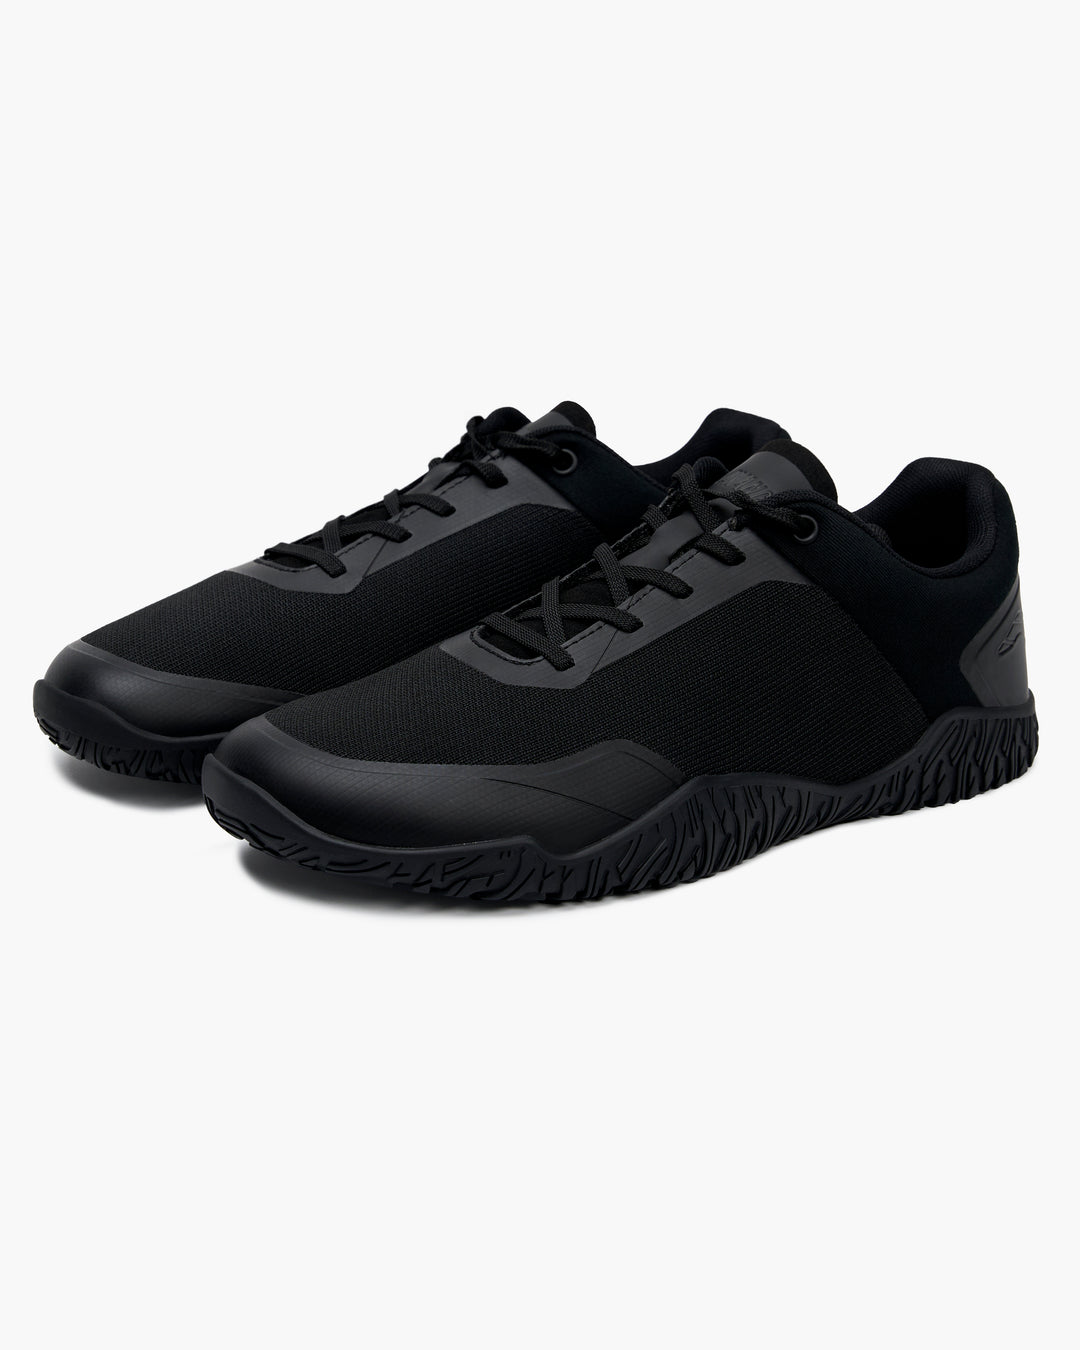 Chaussures Avancus Apex 1.5 Power noir 